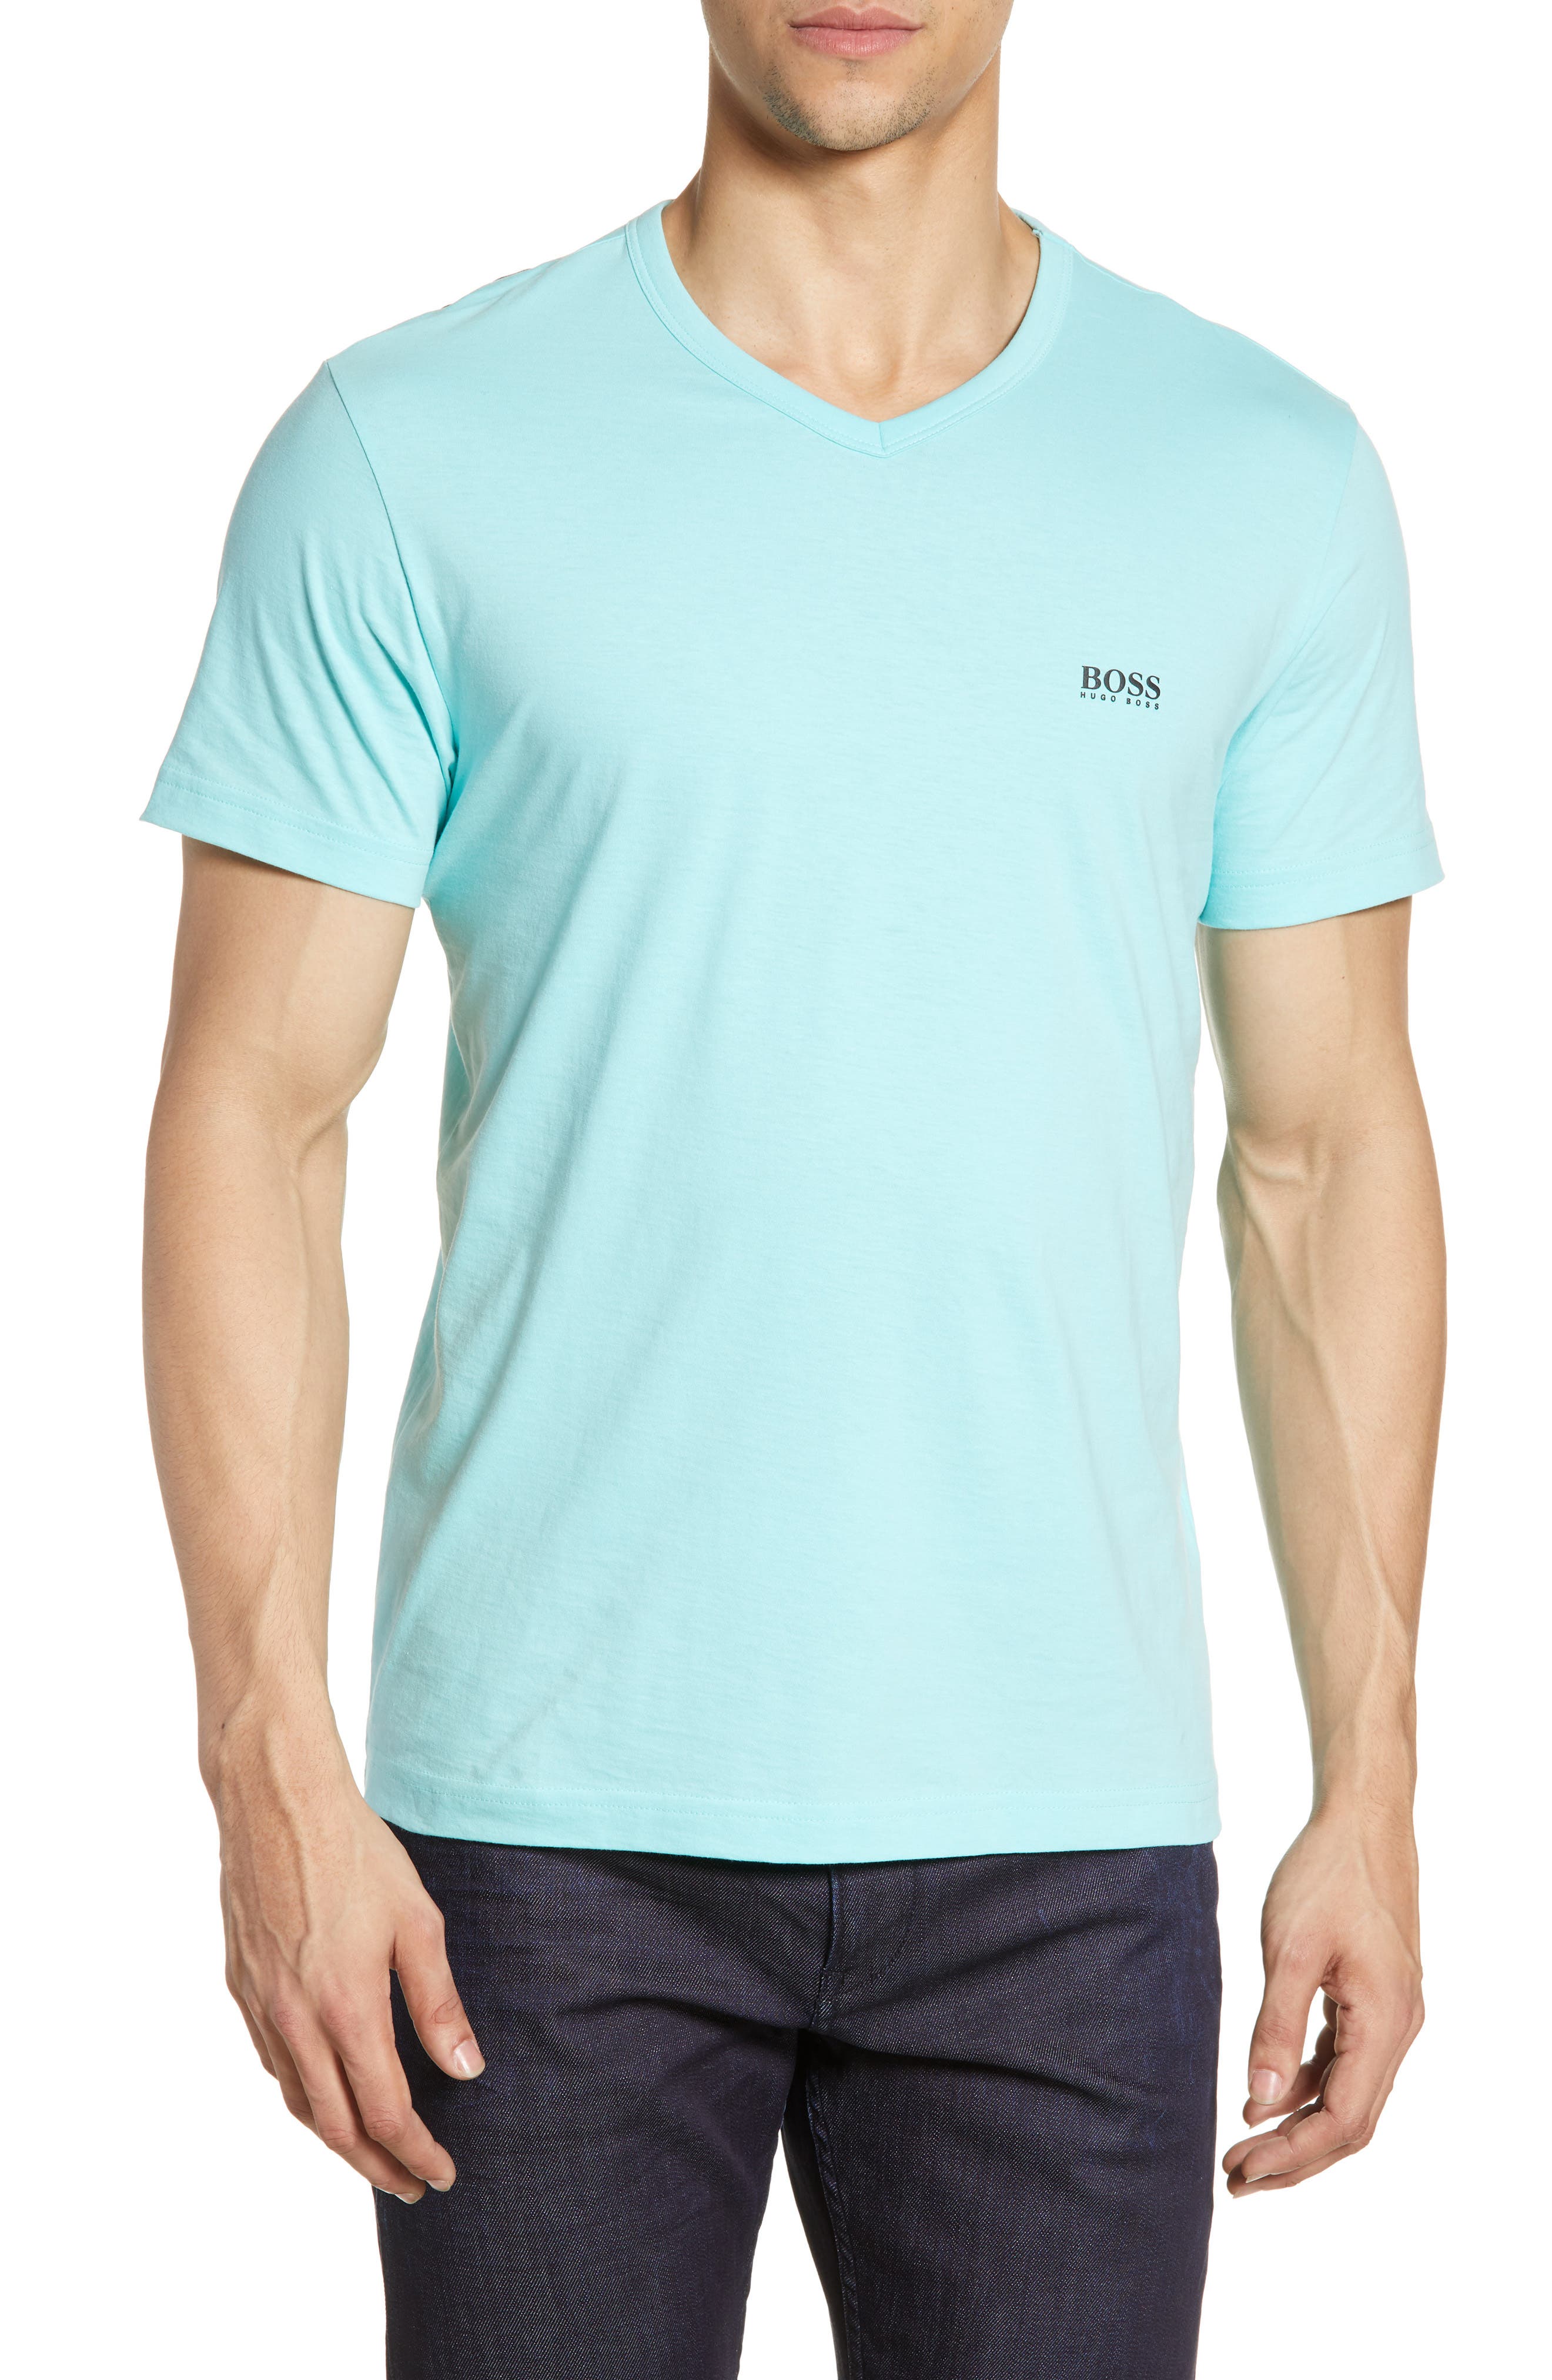 BOSS Men's T-Shirts, stylish comfort clothing